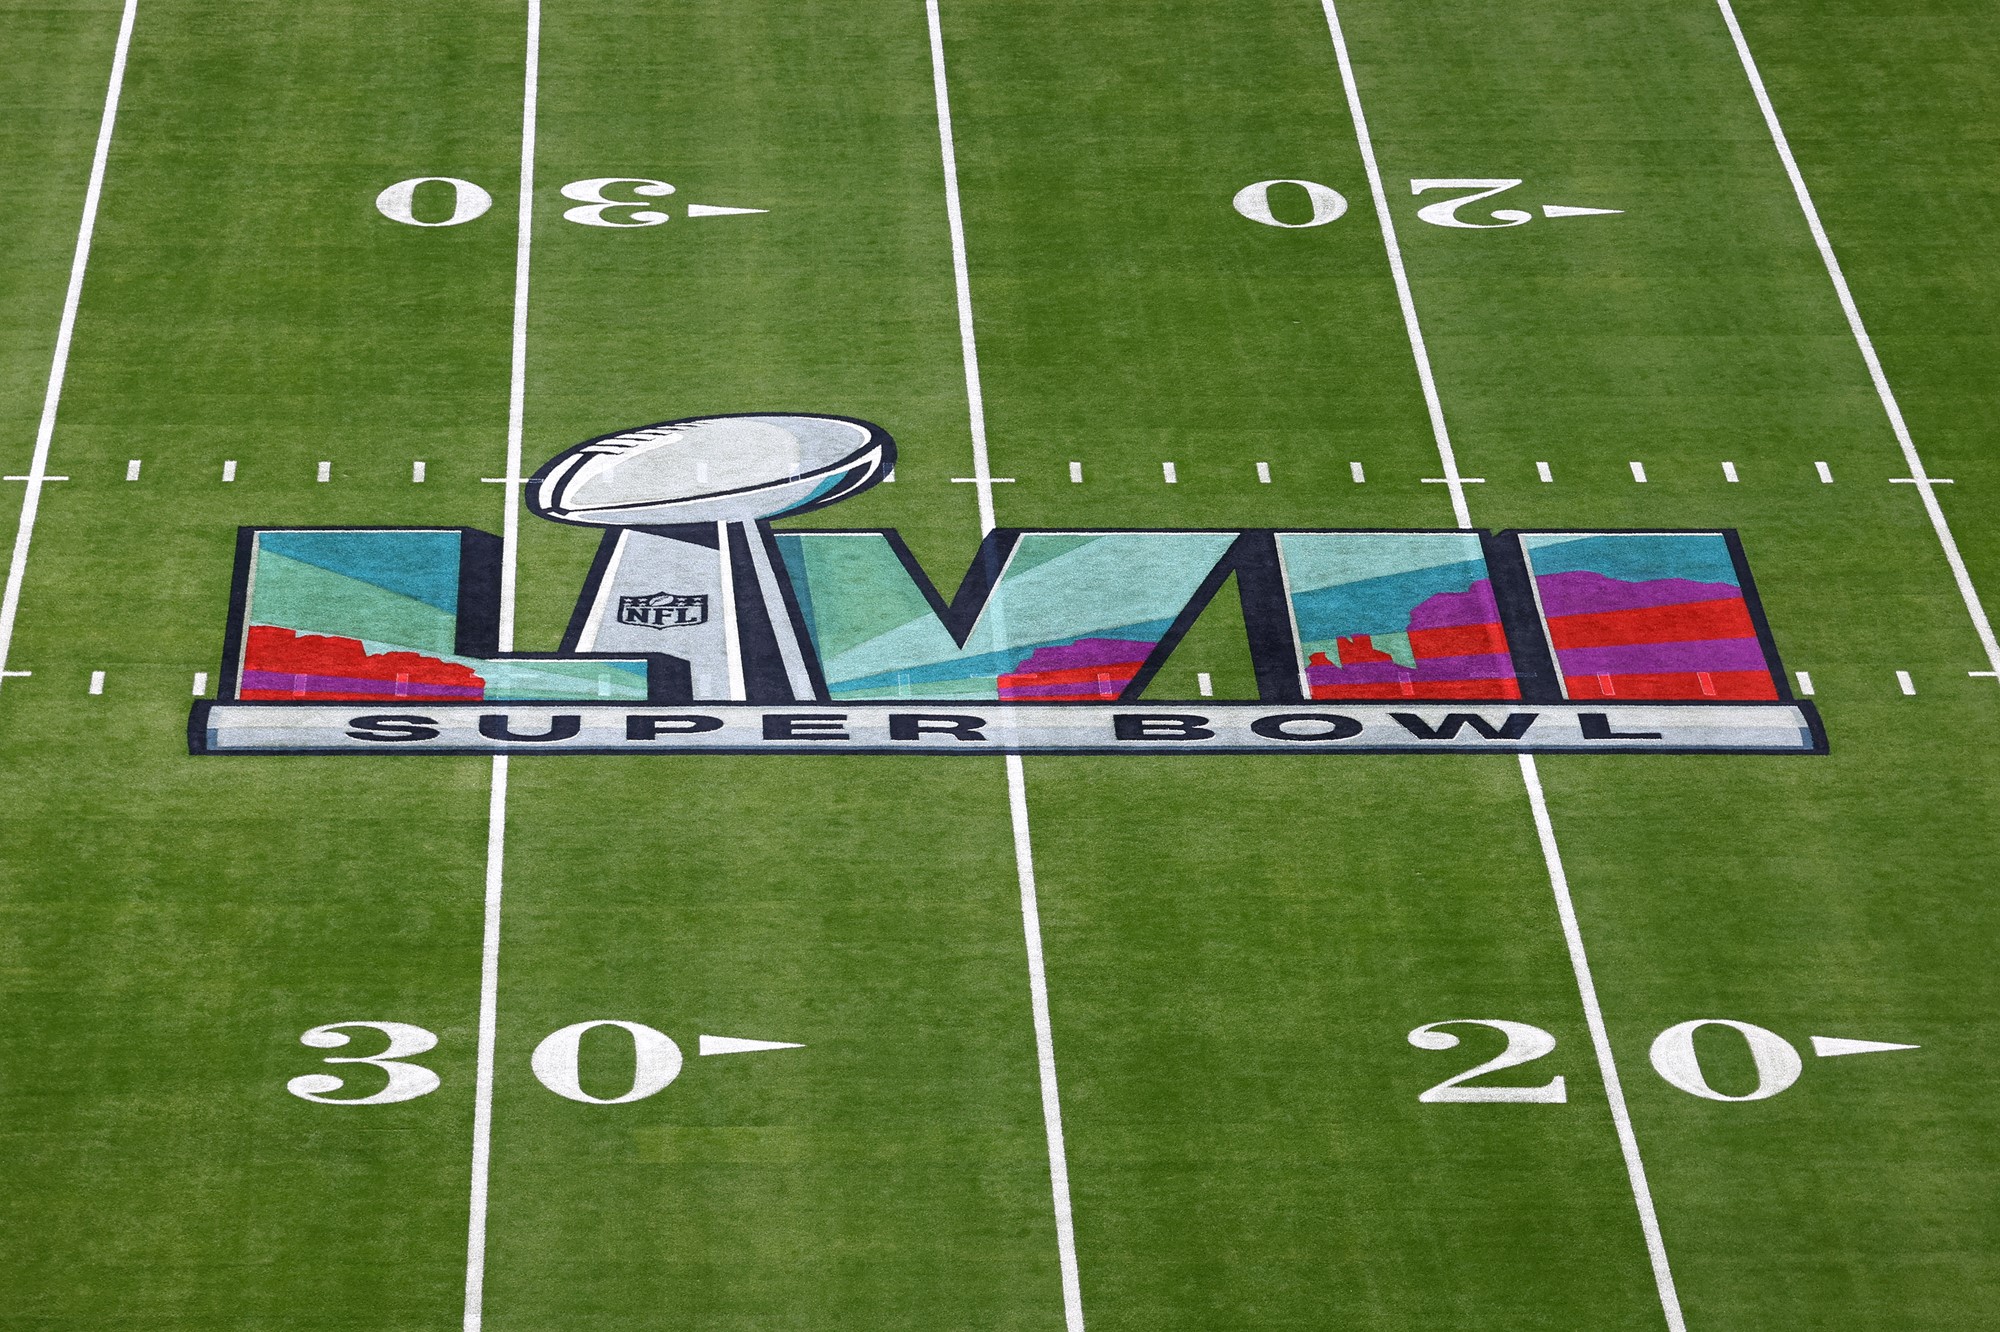 Kansas City Chiefs wins Super Bowl LVII, beating Philadelphia Eagles 38-35 in thrilling NFL finale